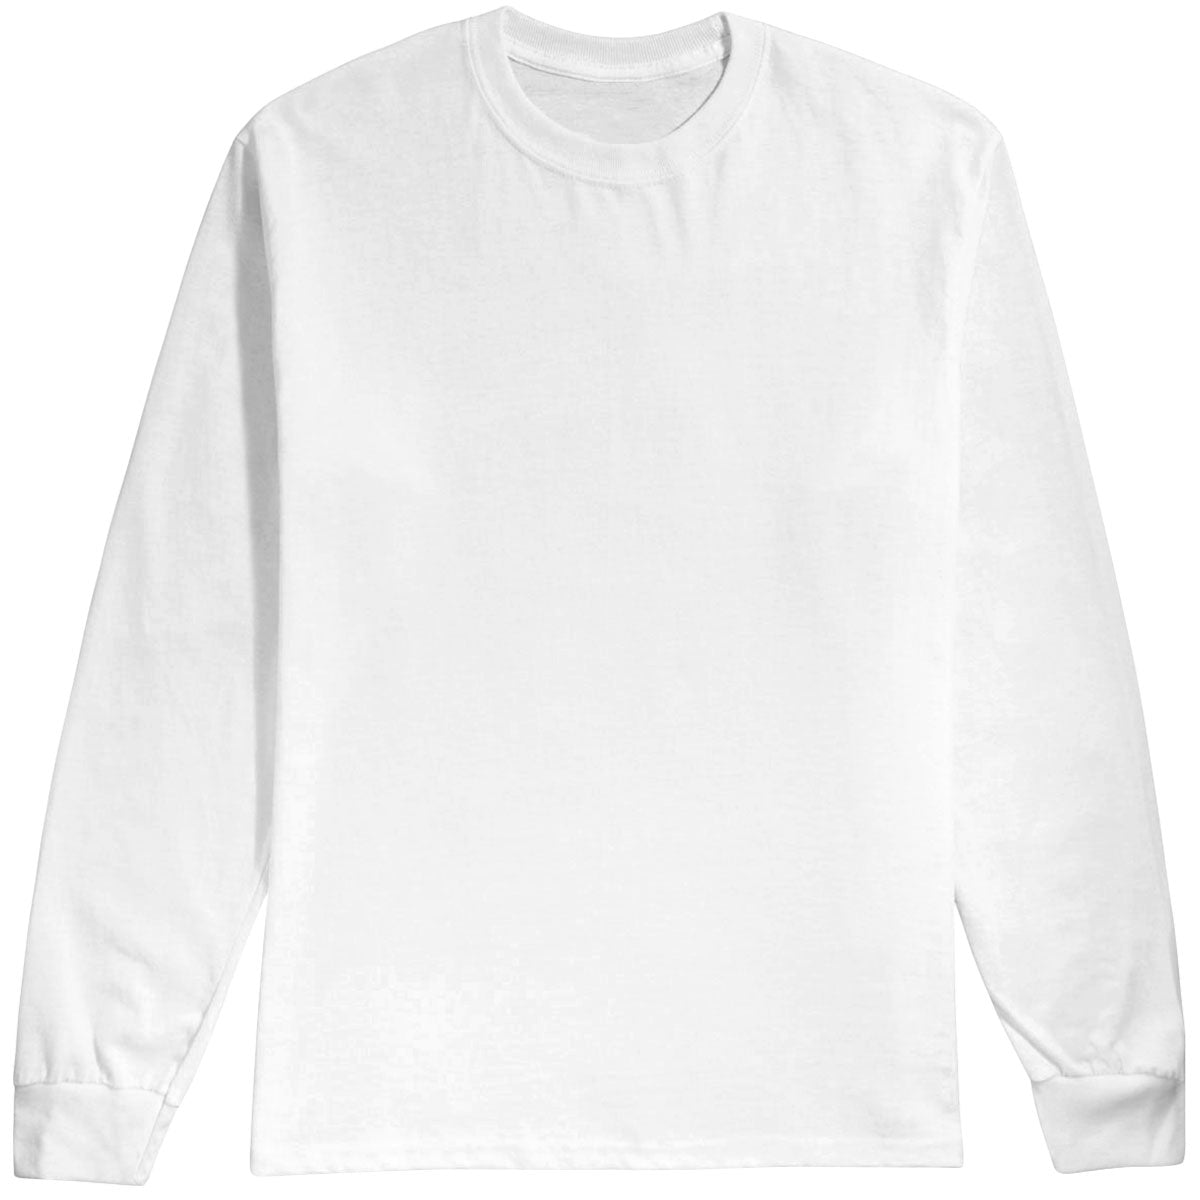 Alien Workshop Spectrum Color-Up Long Sleeve T-Shirt - White - LG image 1